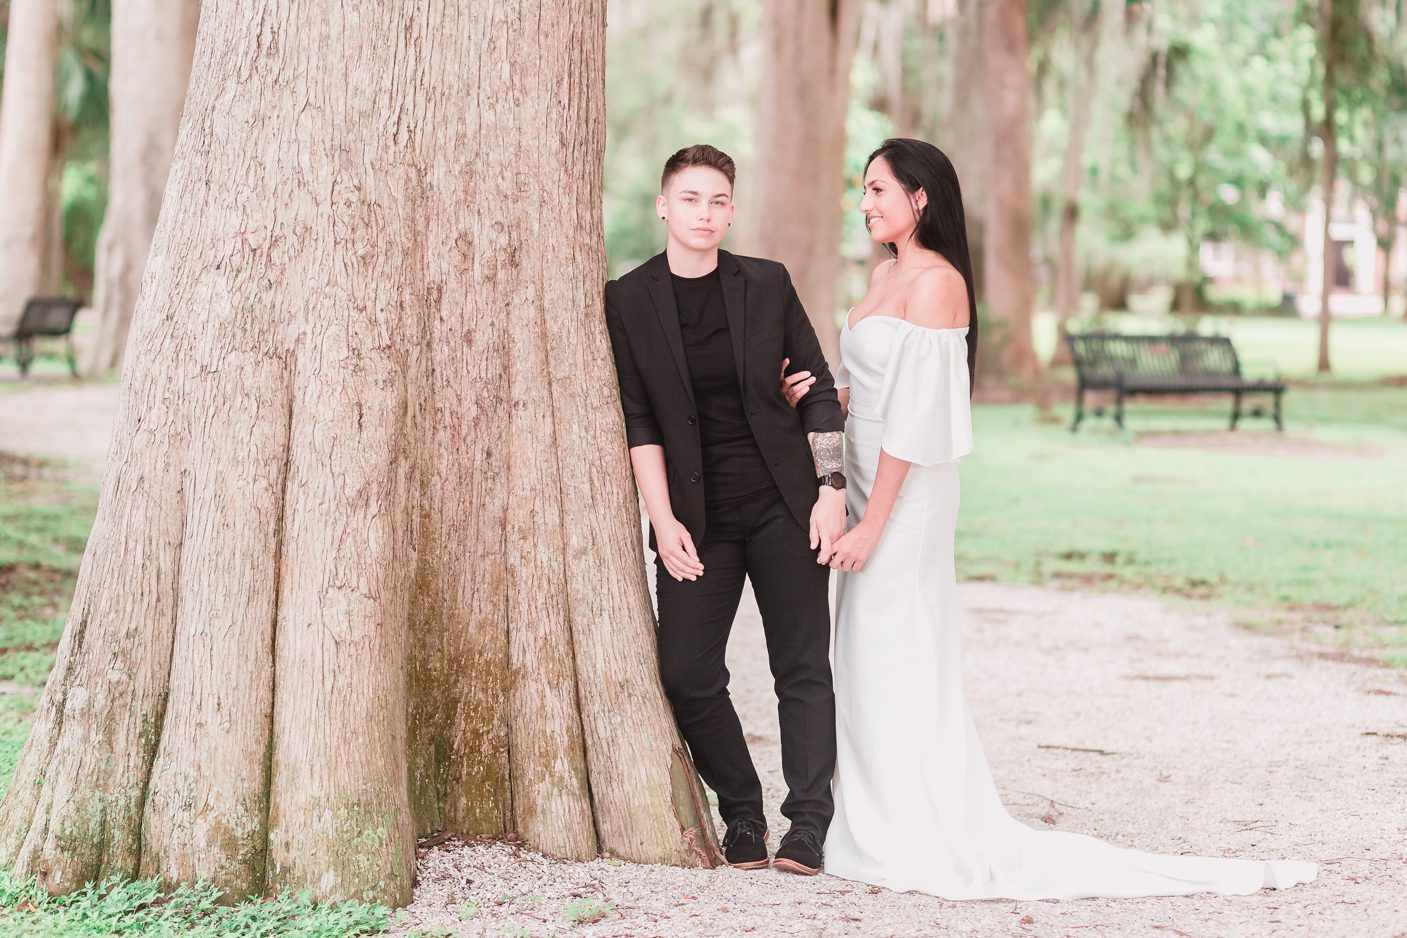 Gay wedding at kraft azalea gardens in Orlando featuring two brides